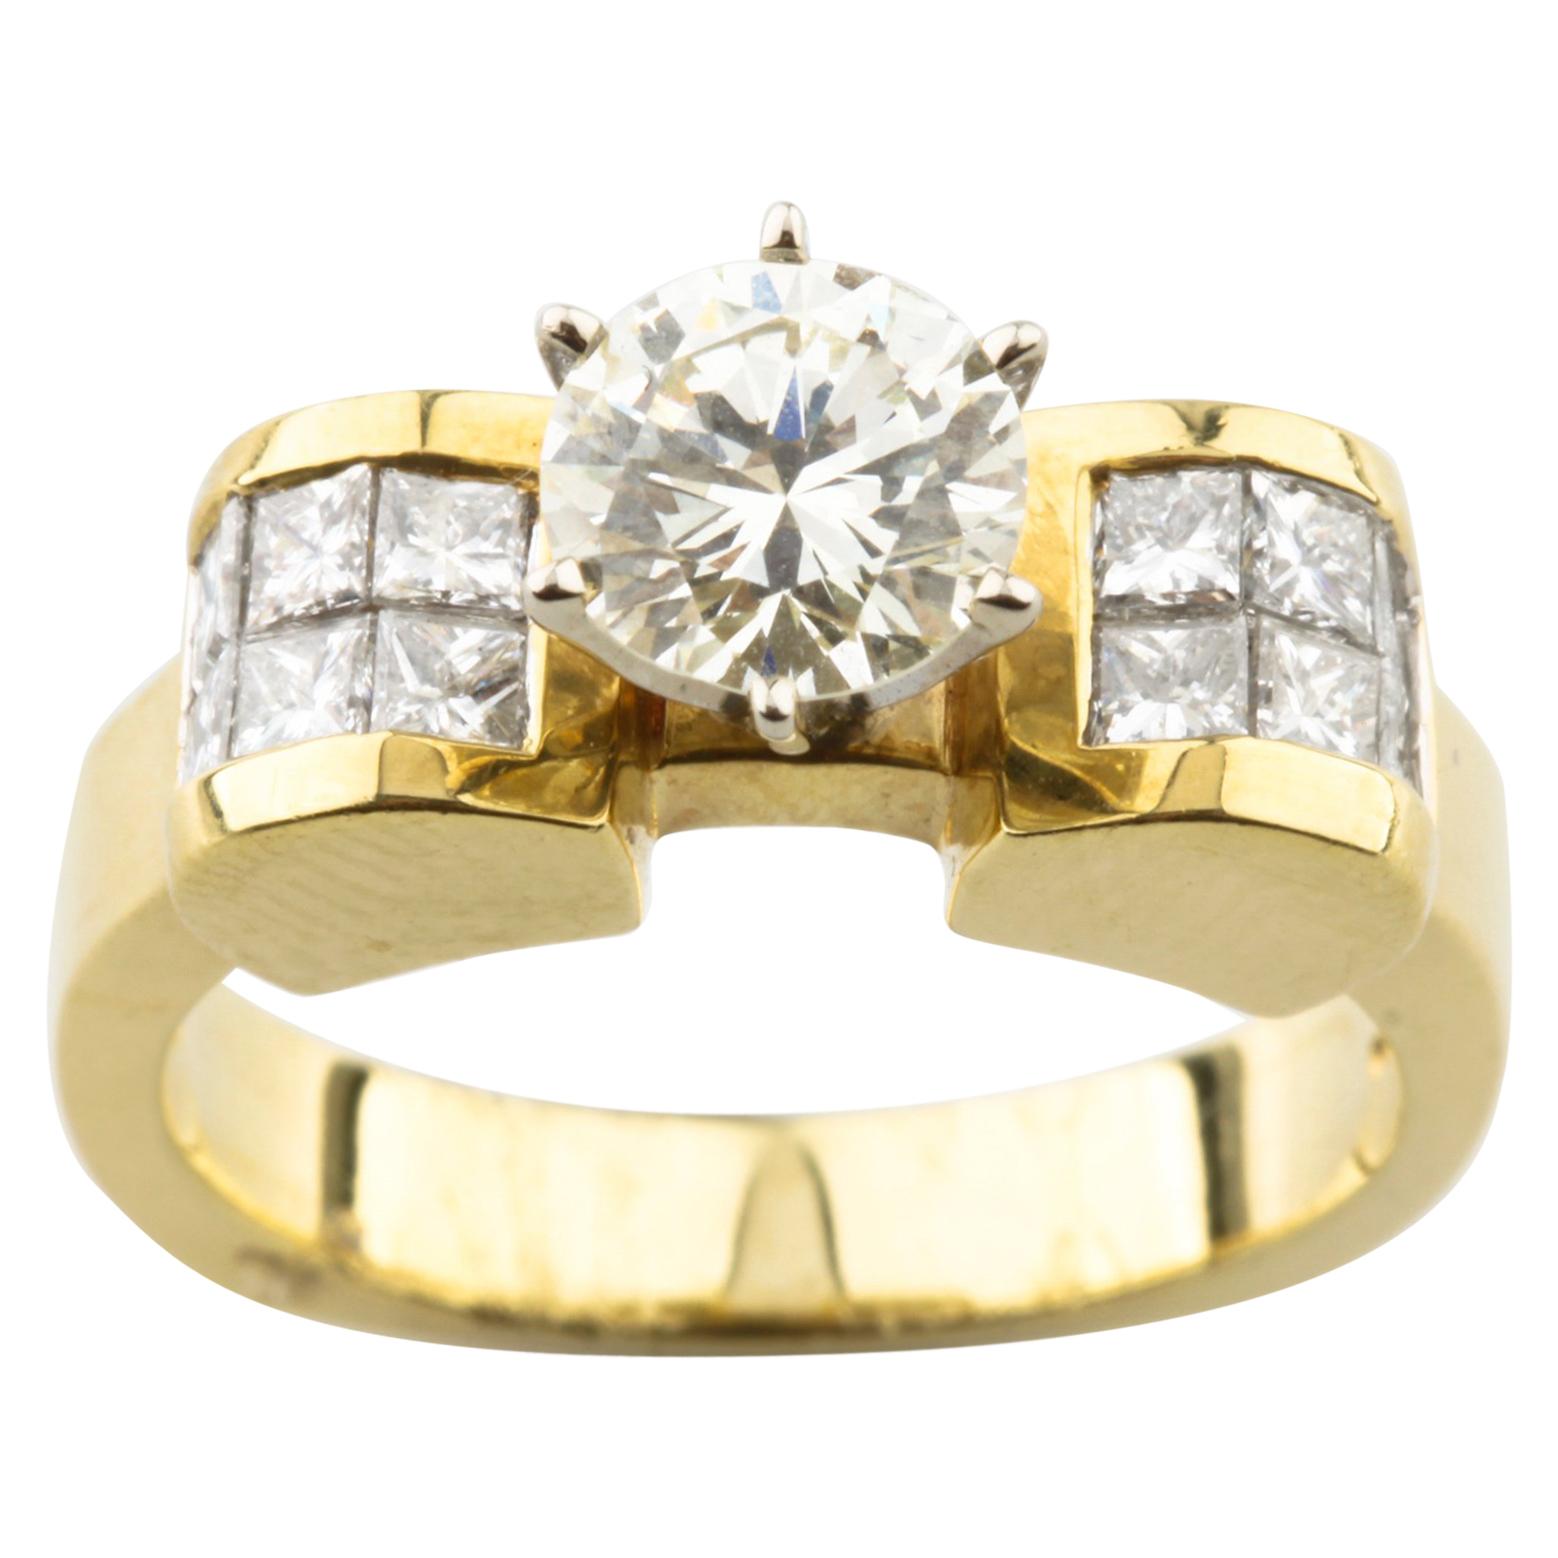 Bague de fiançailles en or jaune 14 carats avec diamants ronds brillants de 1,83 carat